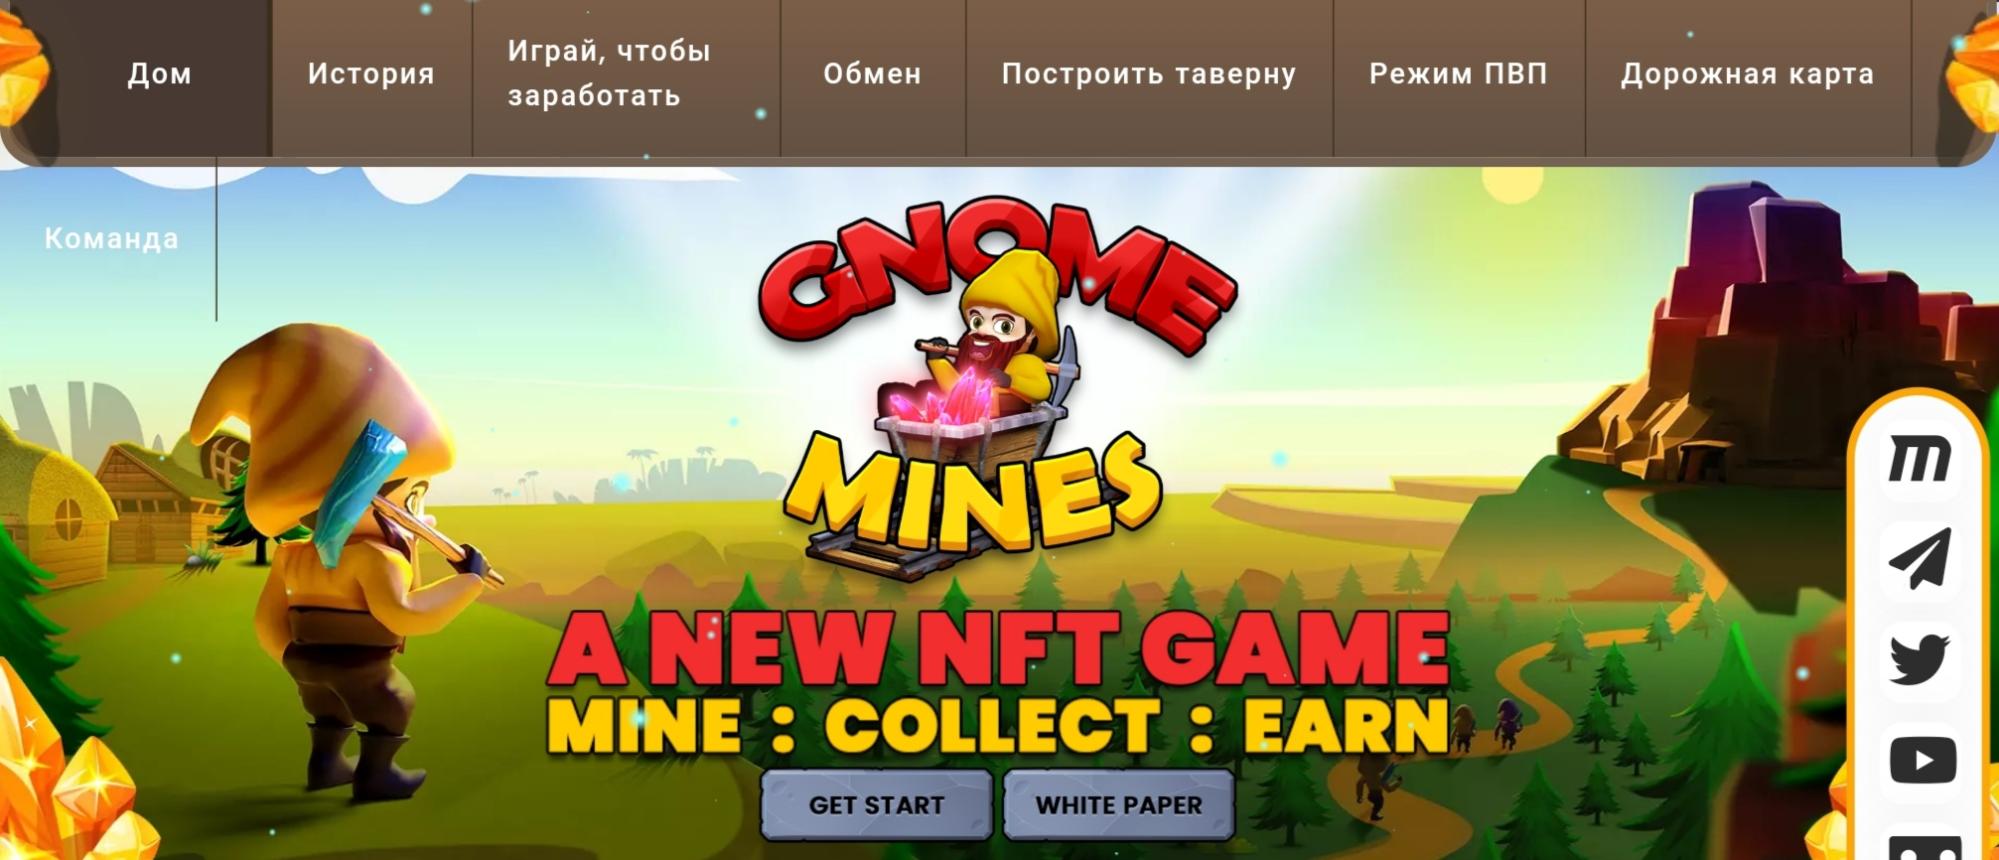 Gnome Mines сайт